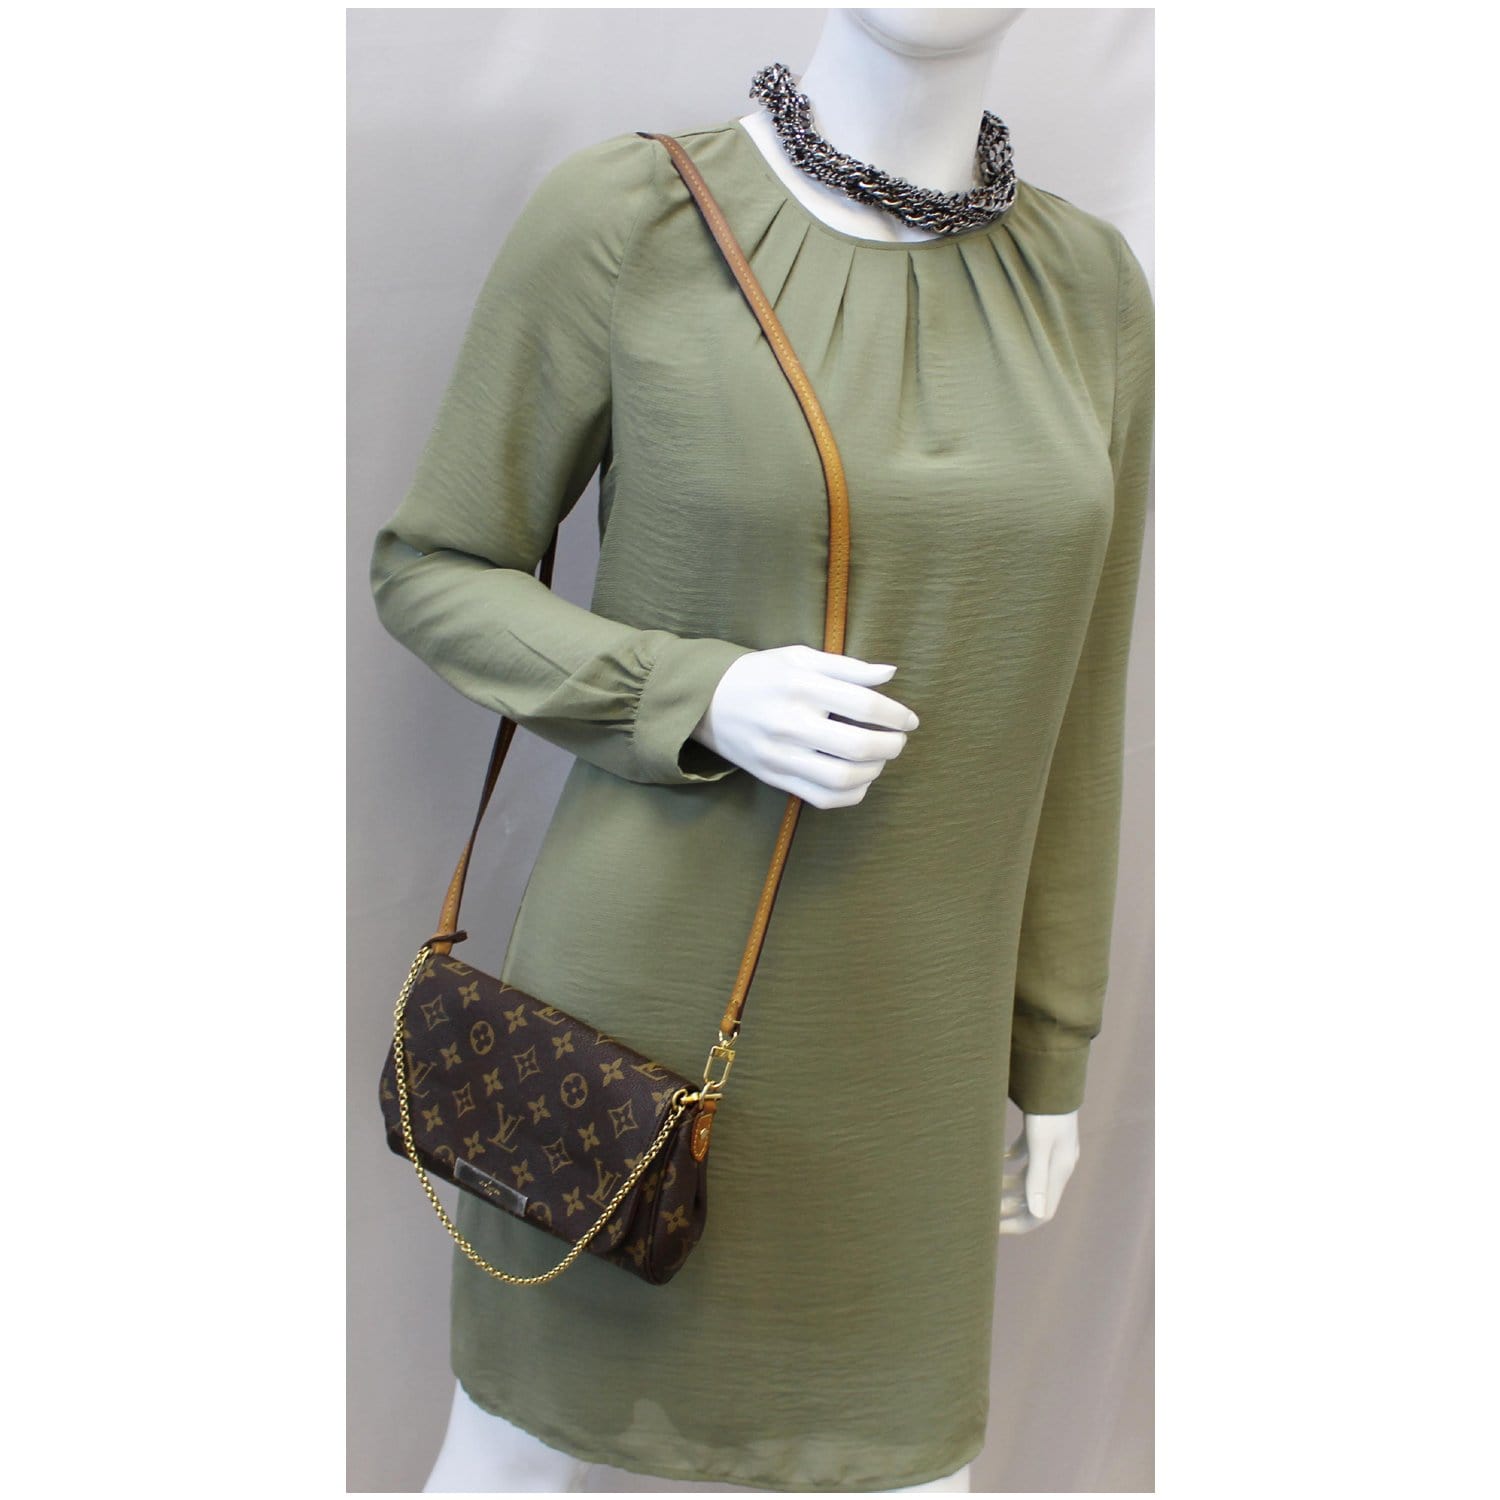 Excentri cité leather handbag Louis Vuitton Brown in Leather - 31567010